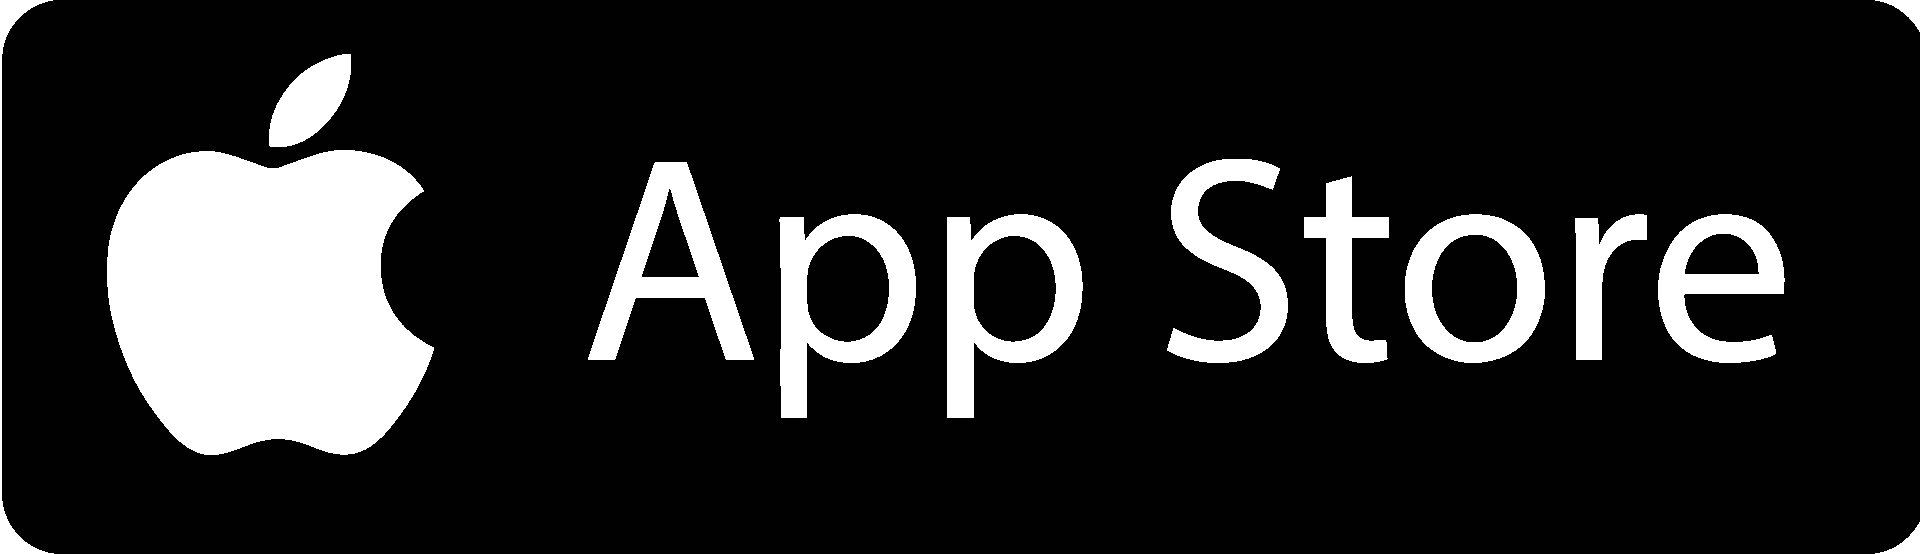 apple-app-store-logo.png